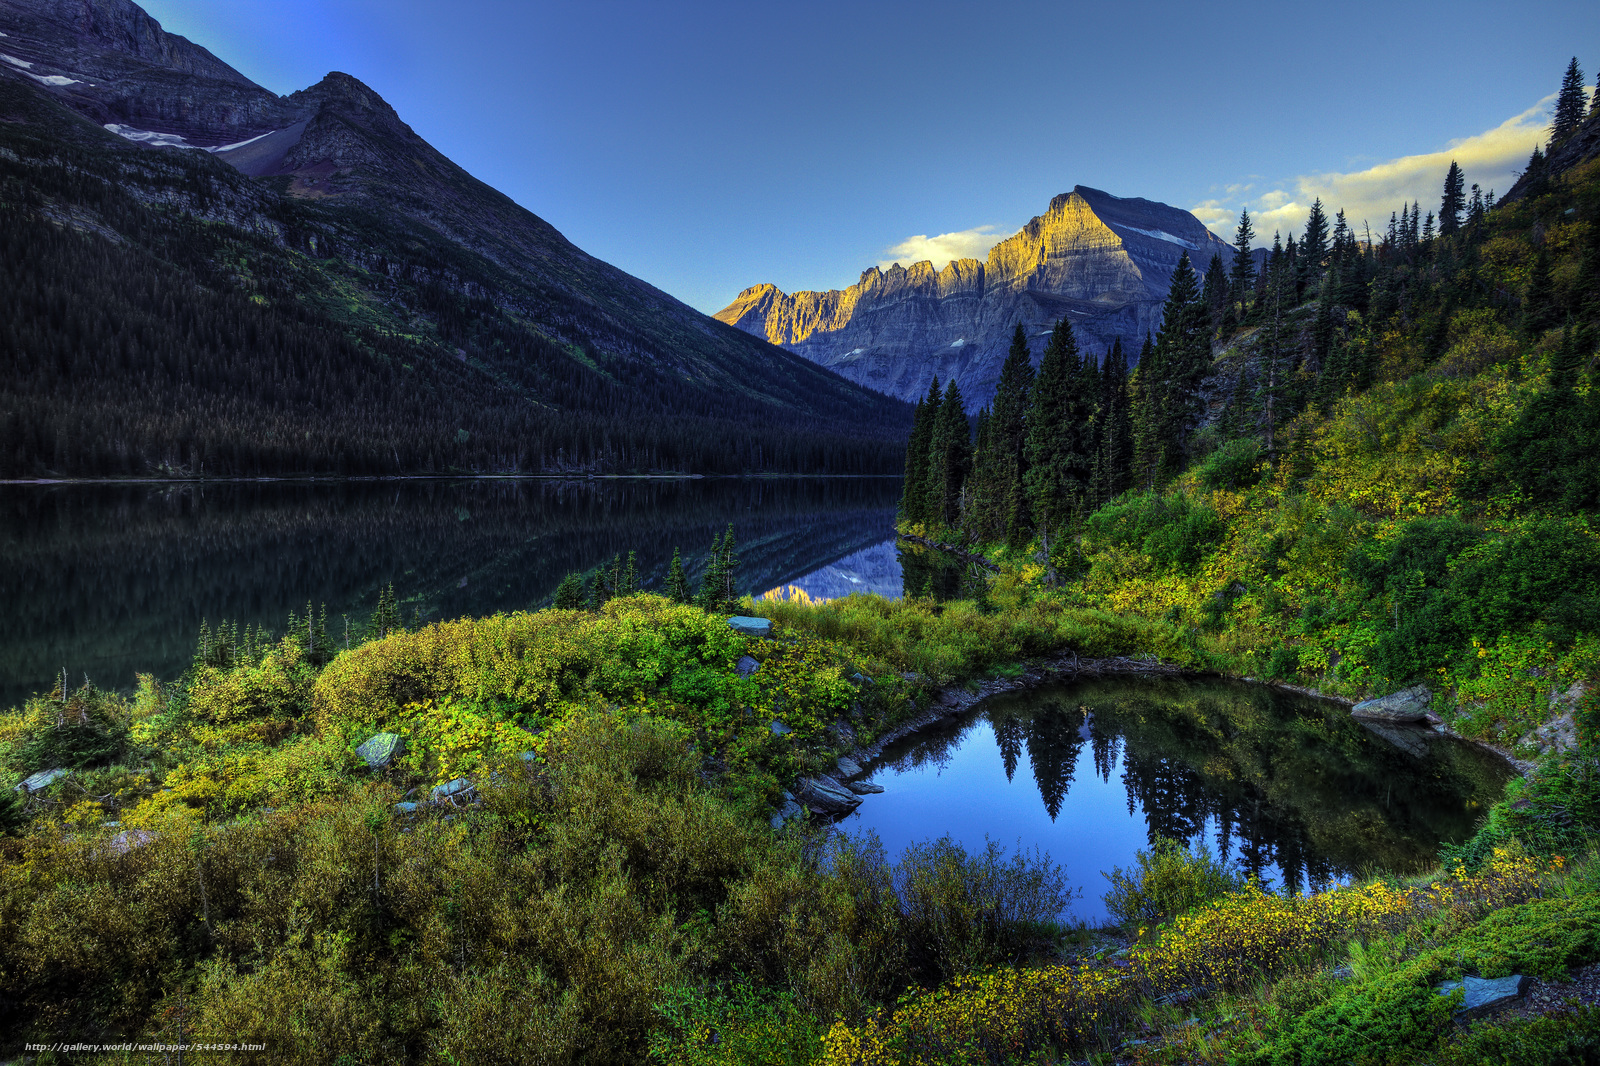 Download wallpaper Glacier National Park lake Mountains trees free